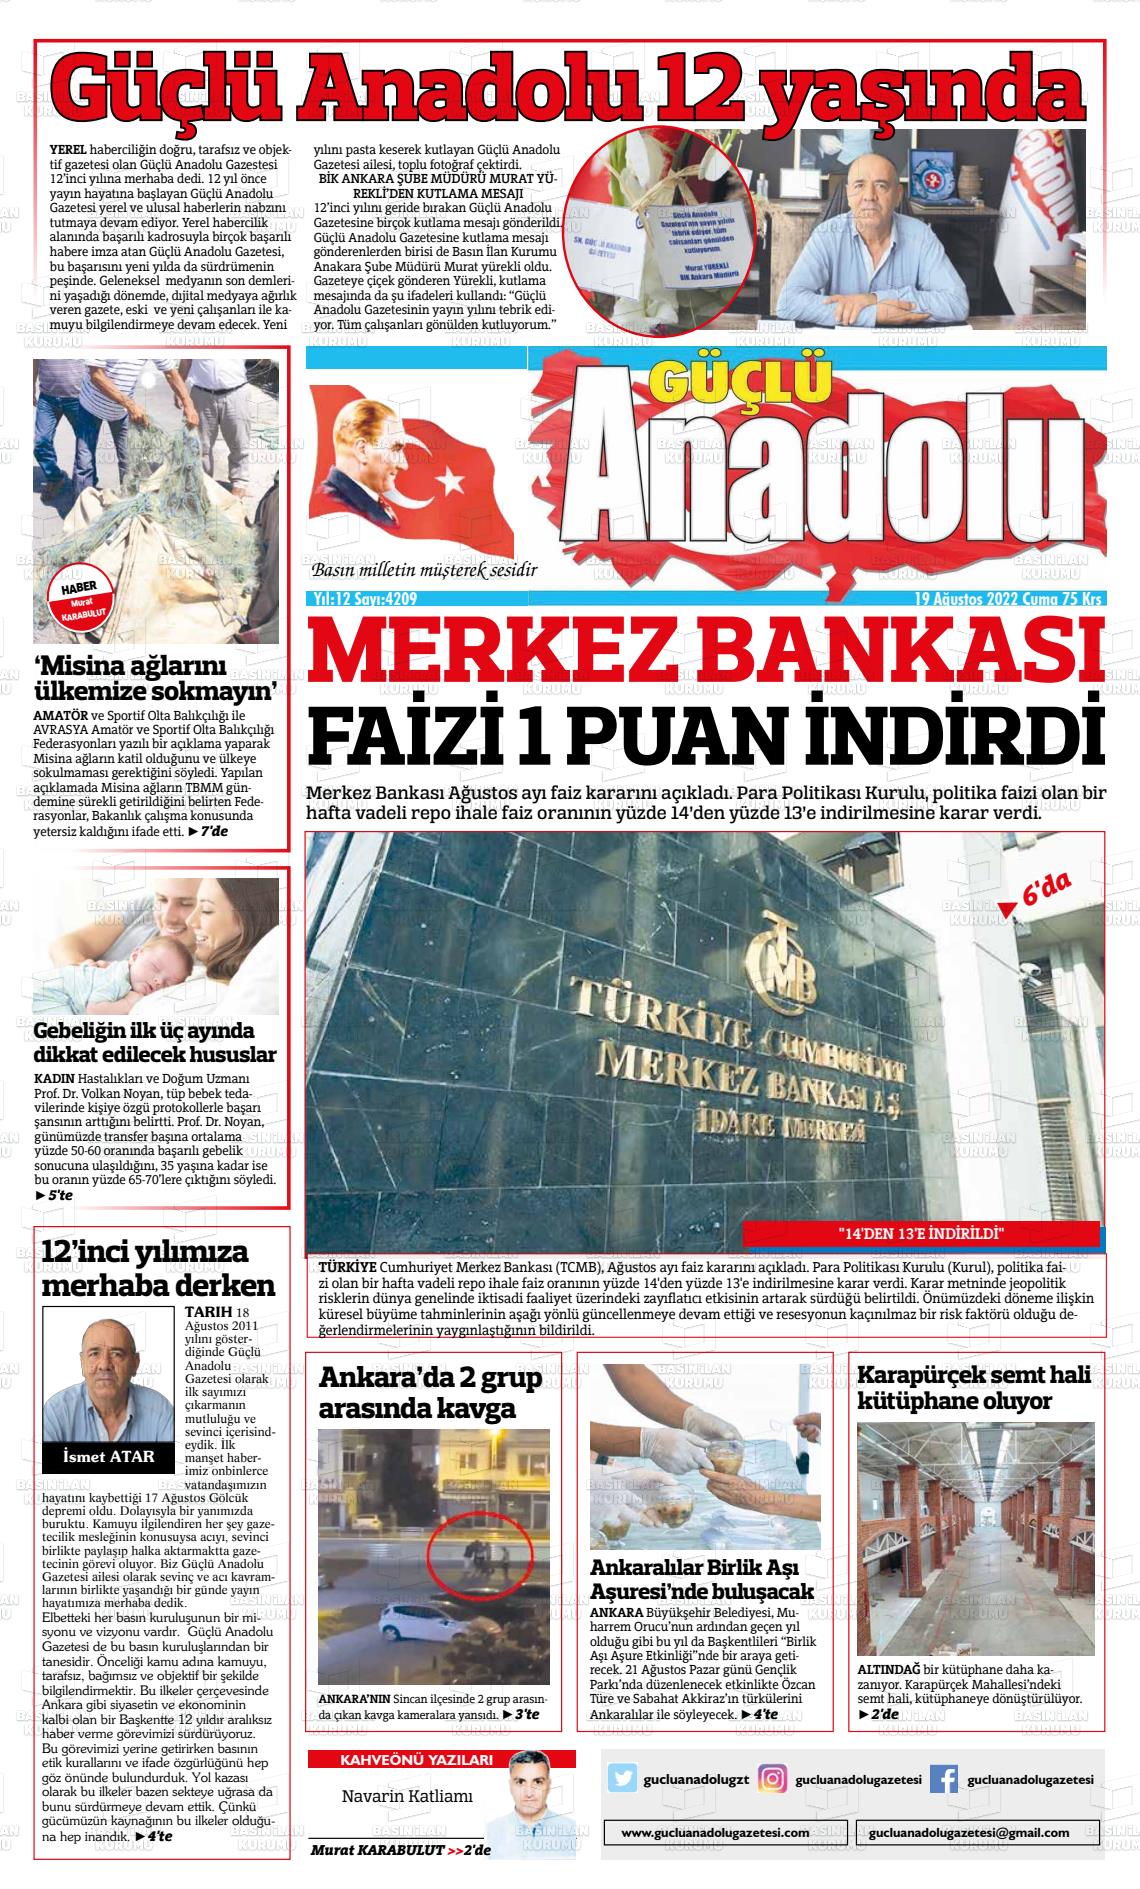 19 Ağustos 2022 Güçlü Anadolu Gazete Manşeti